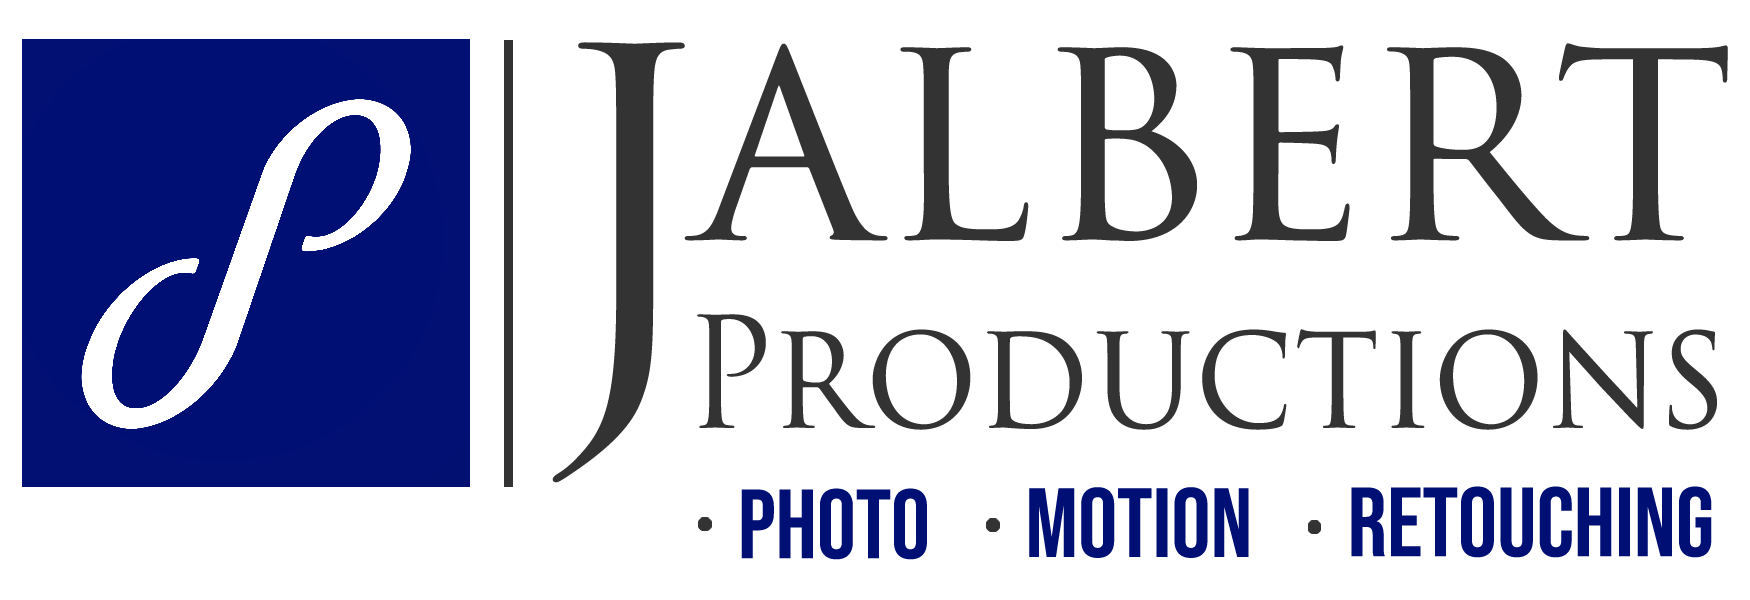 Jalbert Productions Logo